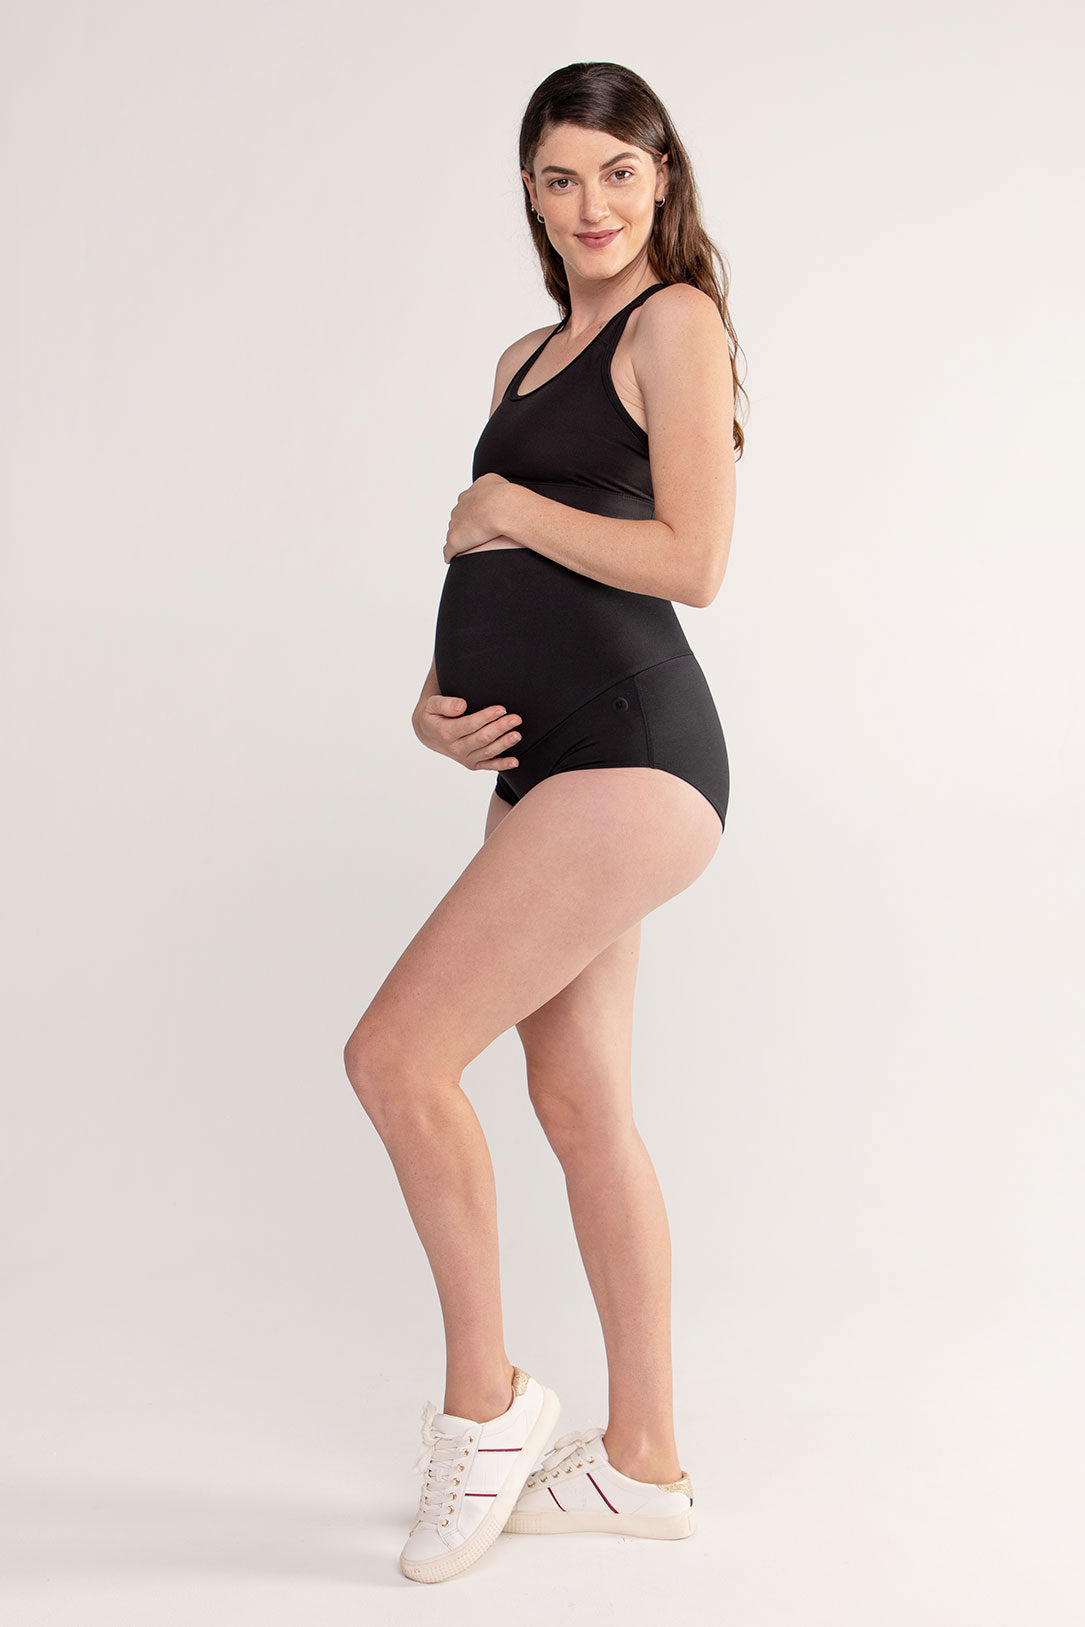 Postnatal Support Brief in black, Maternity, Active Truth